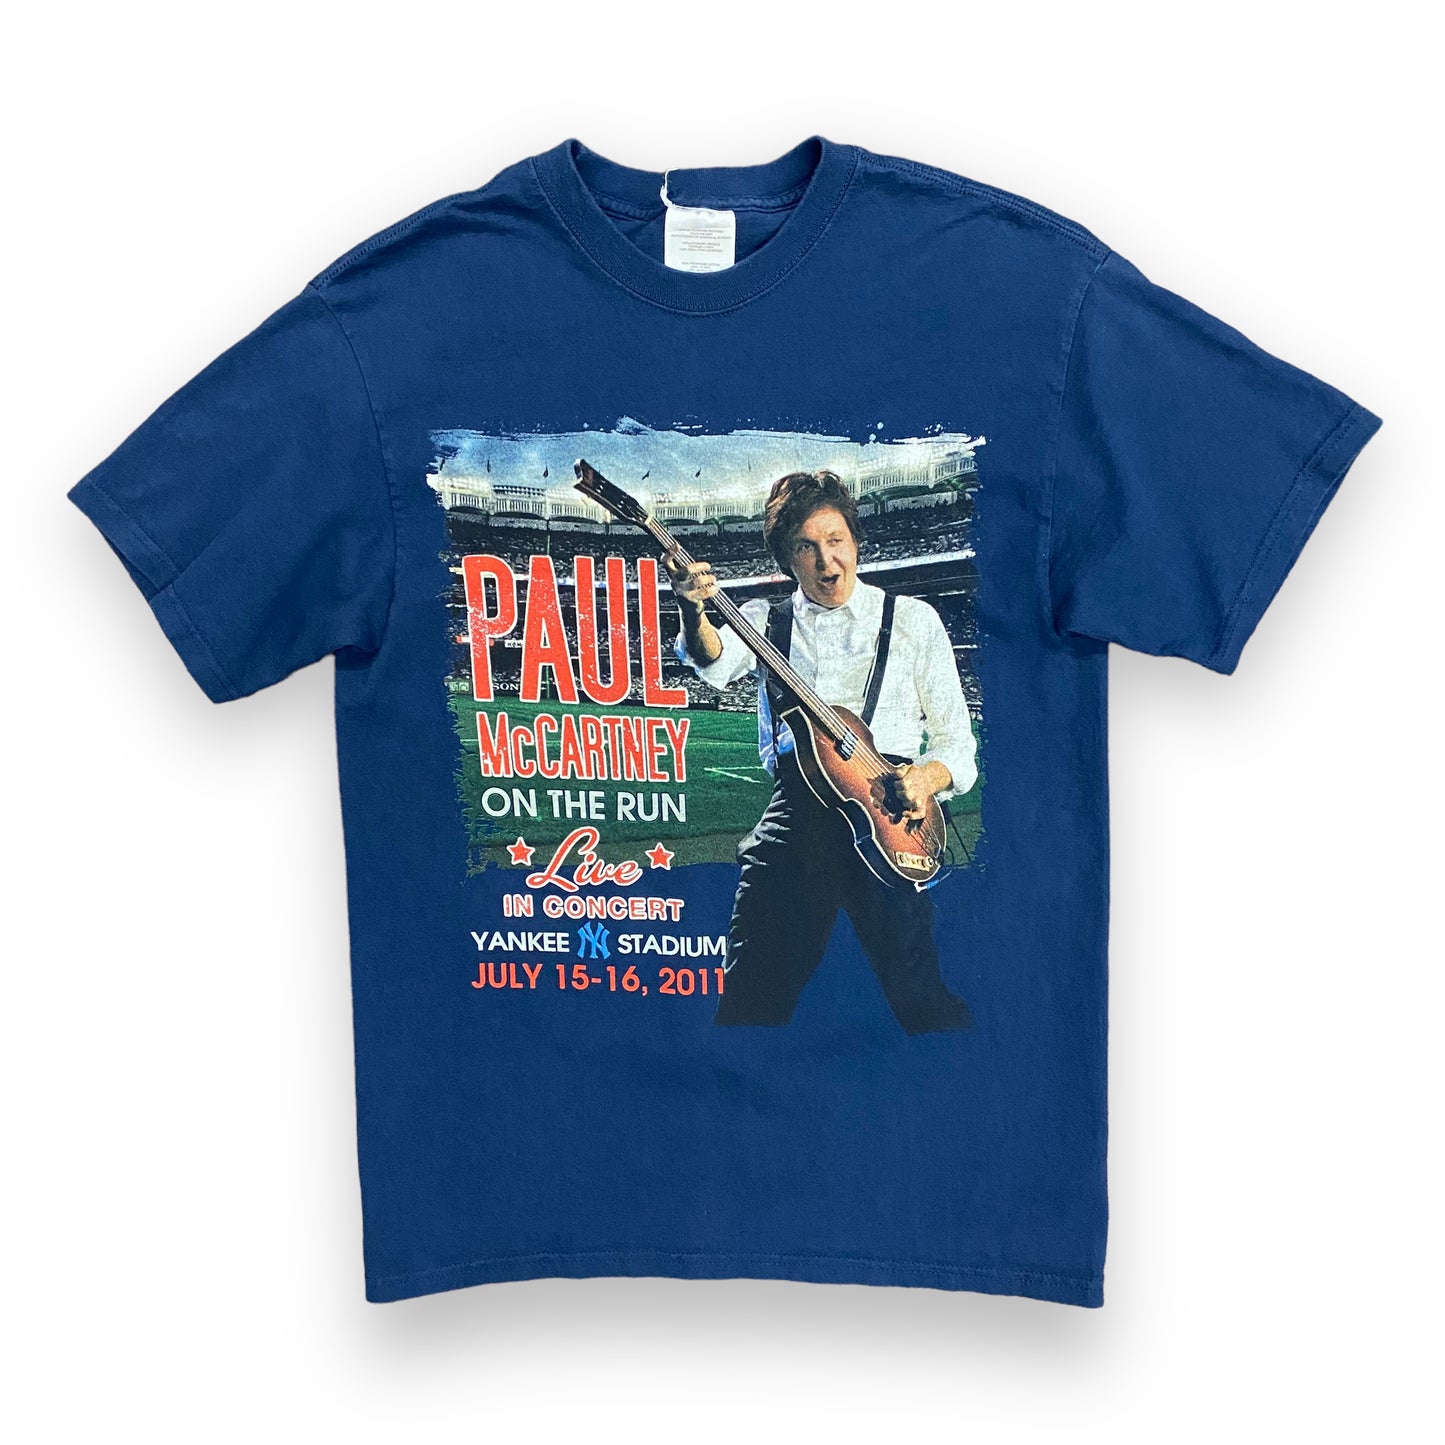 2011 Paul McCartney On The Run Tour Live at Yankee Stadium Tee - Size Medium